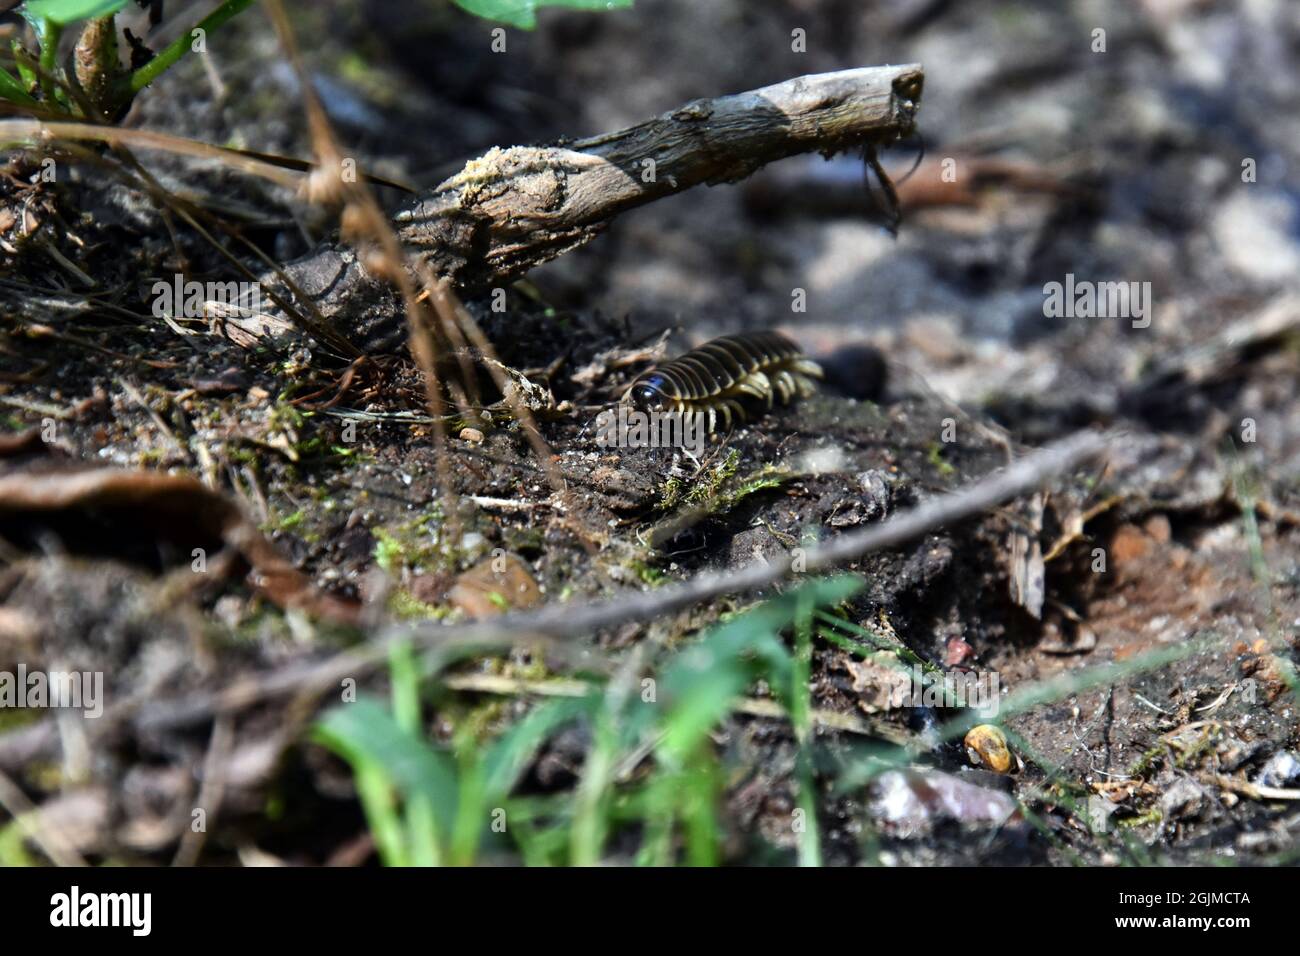 A Yellow-legged Pleuroloma millipede (Pleuoloma flavipes) travels on the forest floor Stock Photo